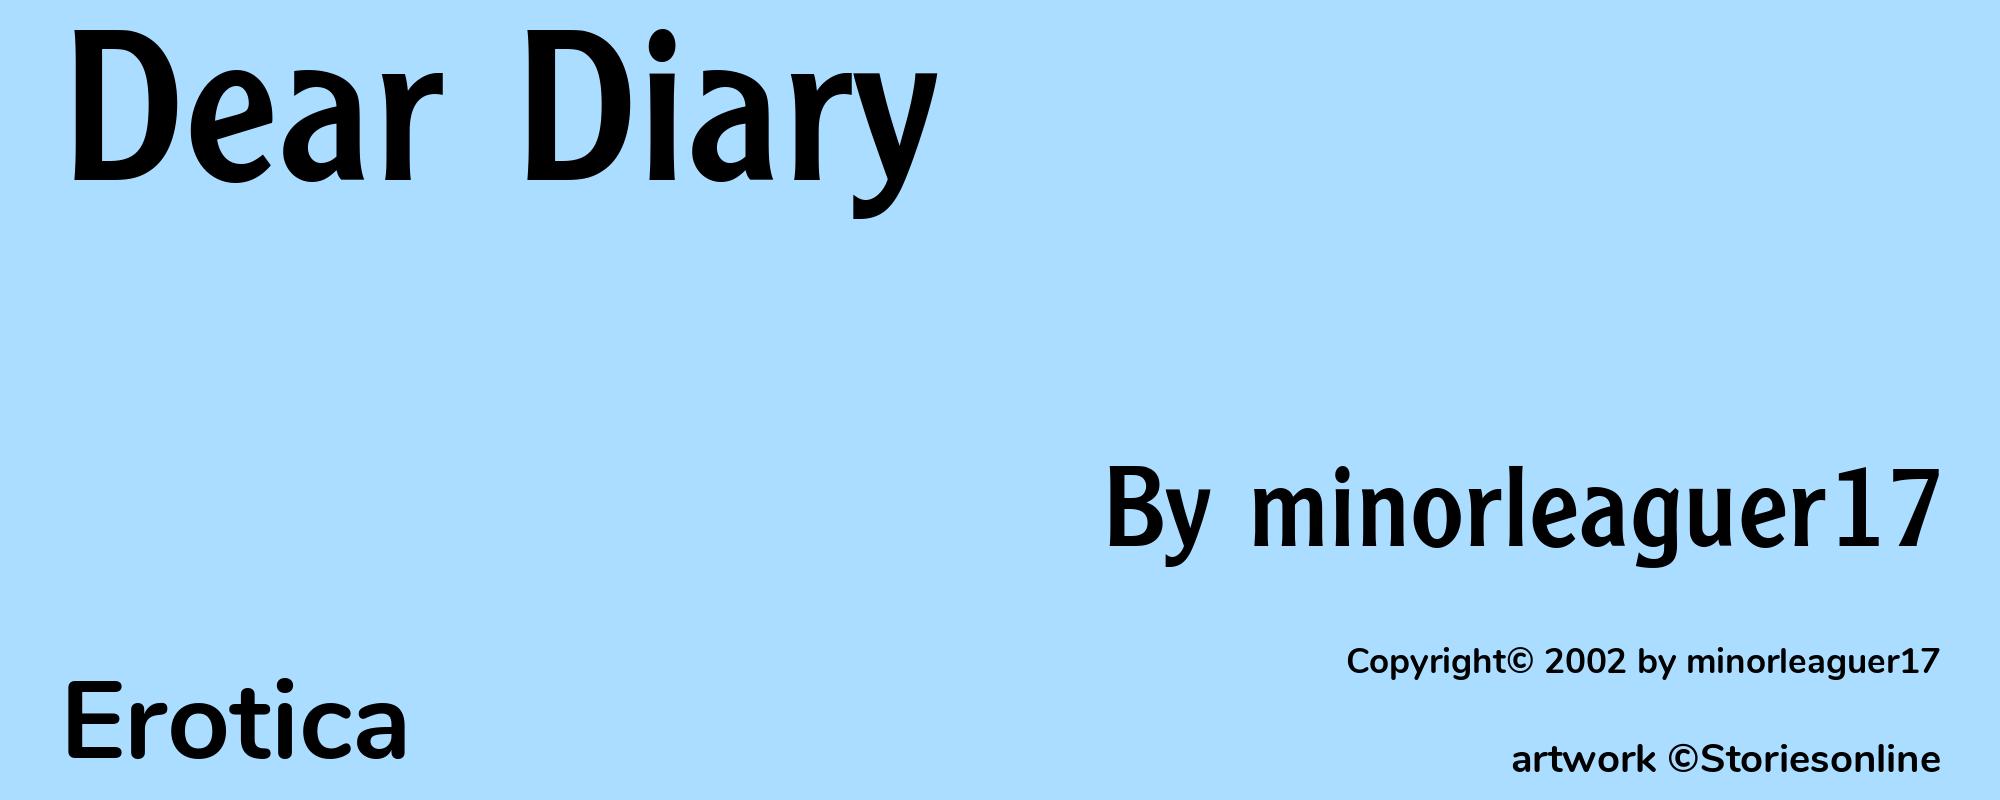 Dear Diary - Cover